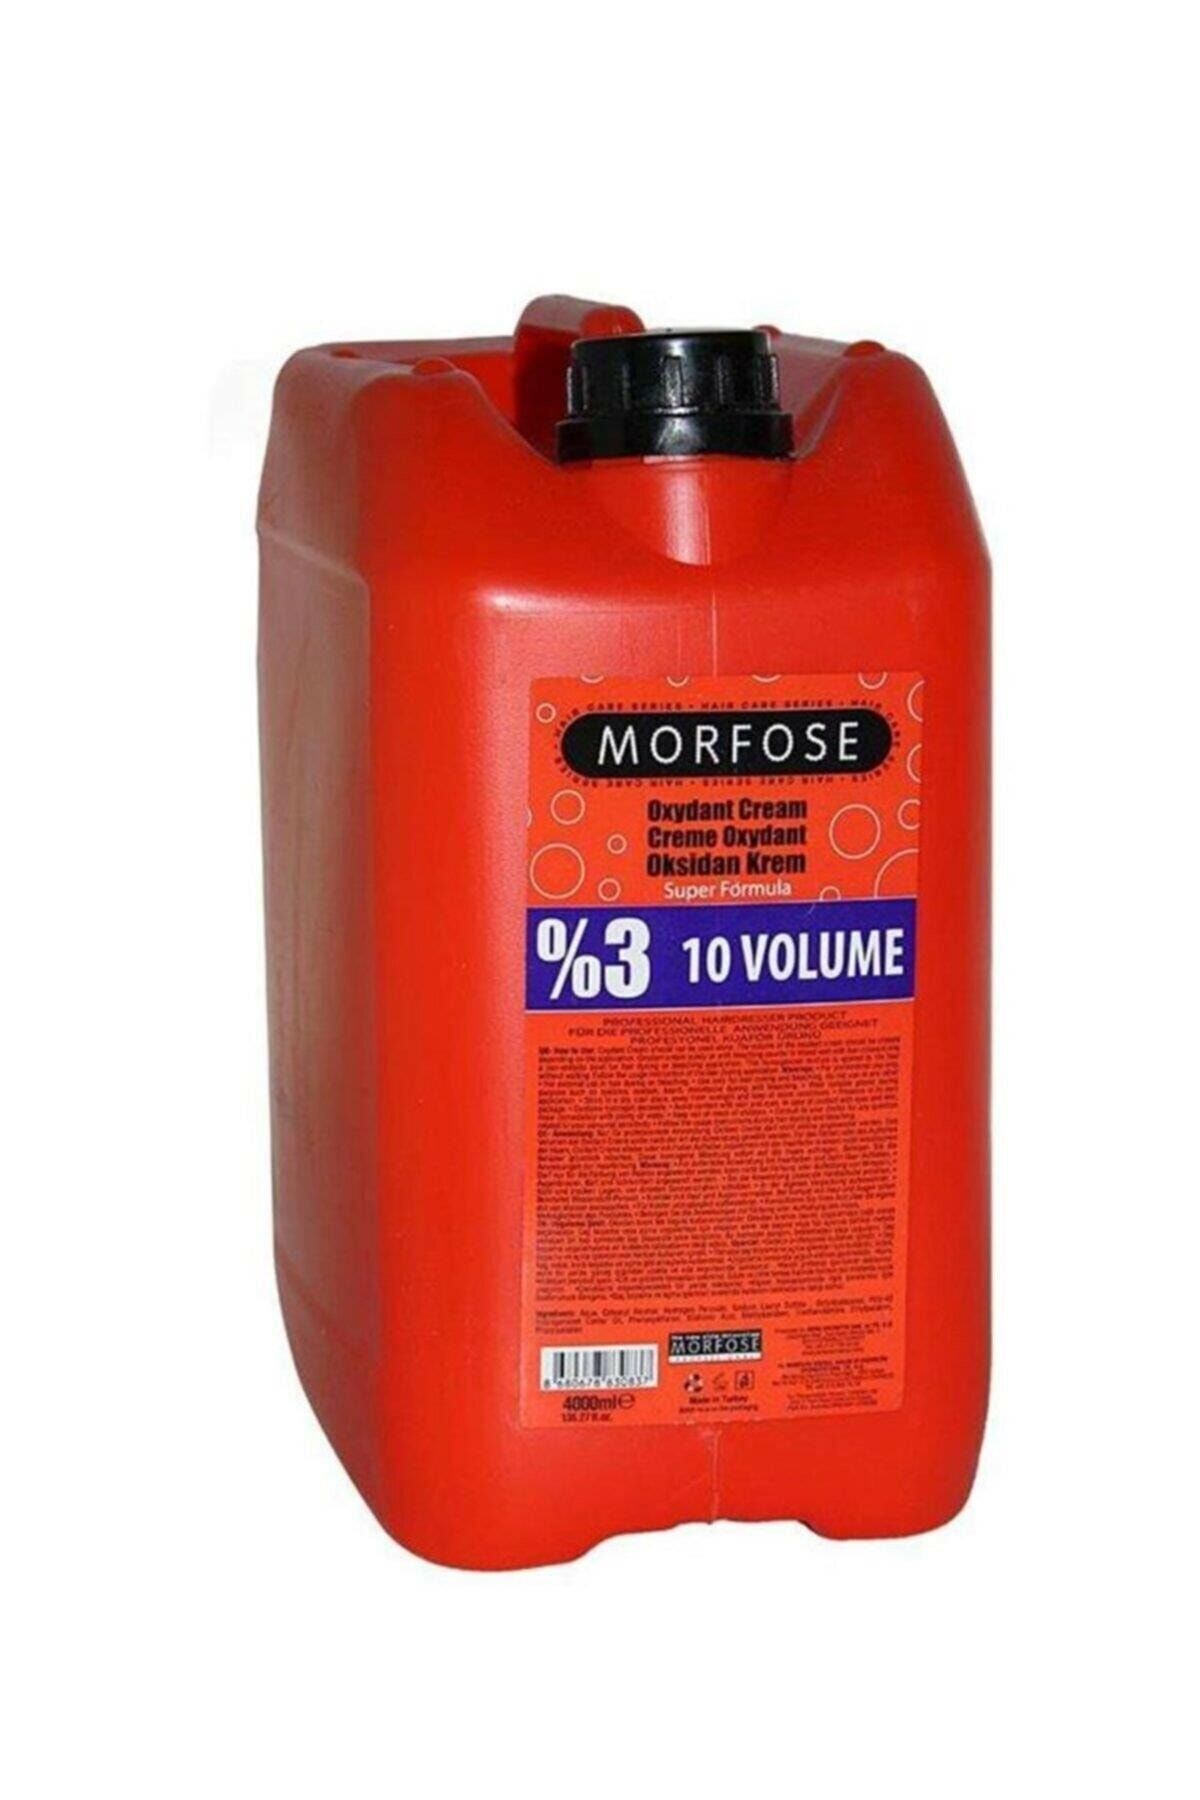 Morfose %3 10 Volume Oksidan Krem 4000 ml